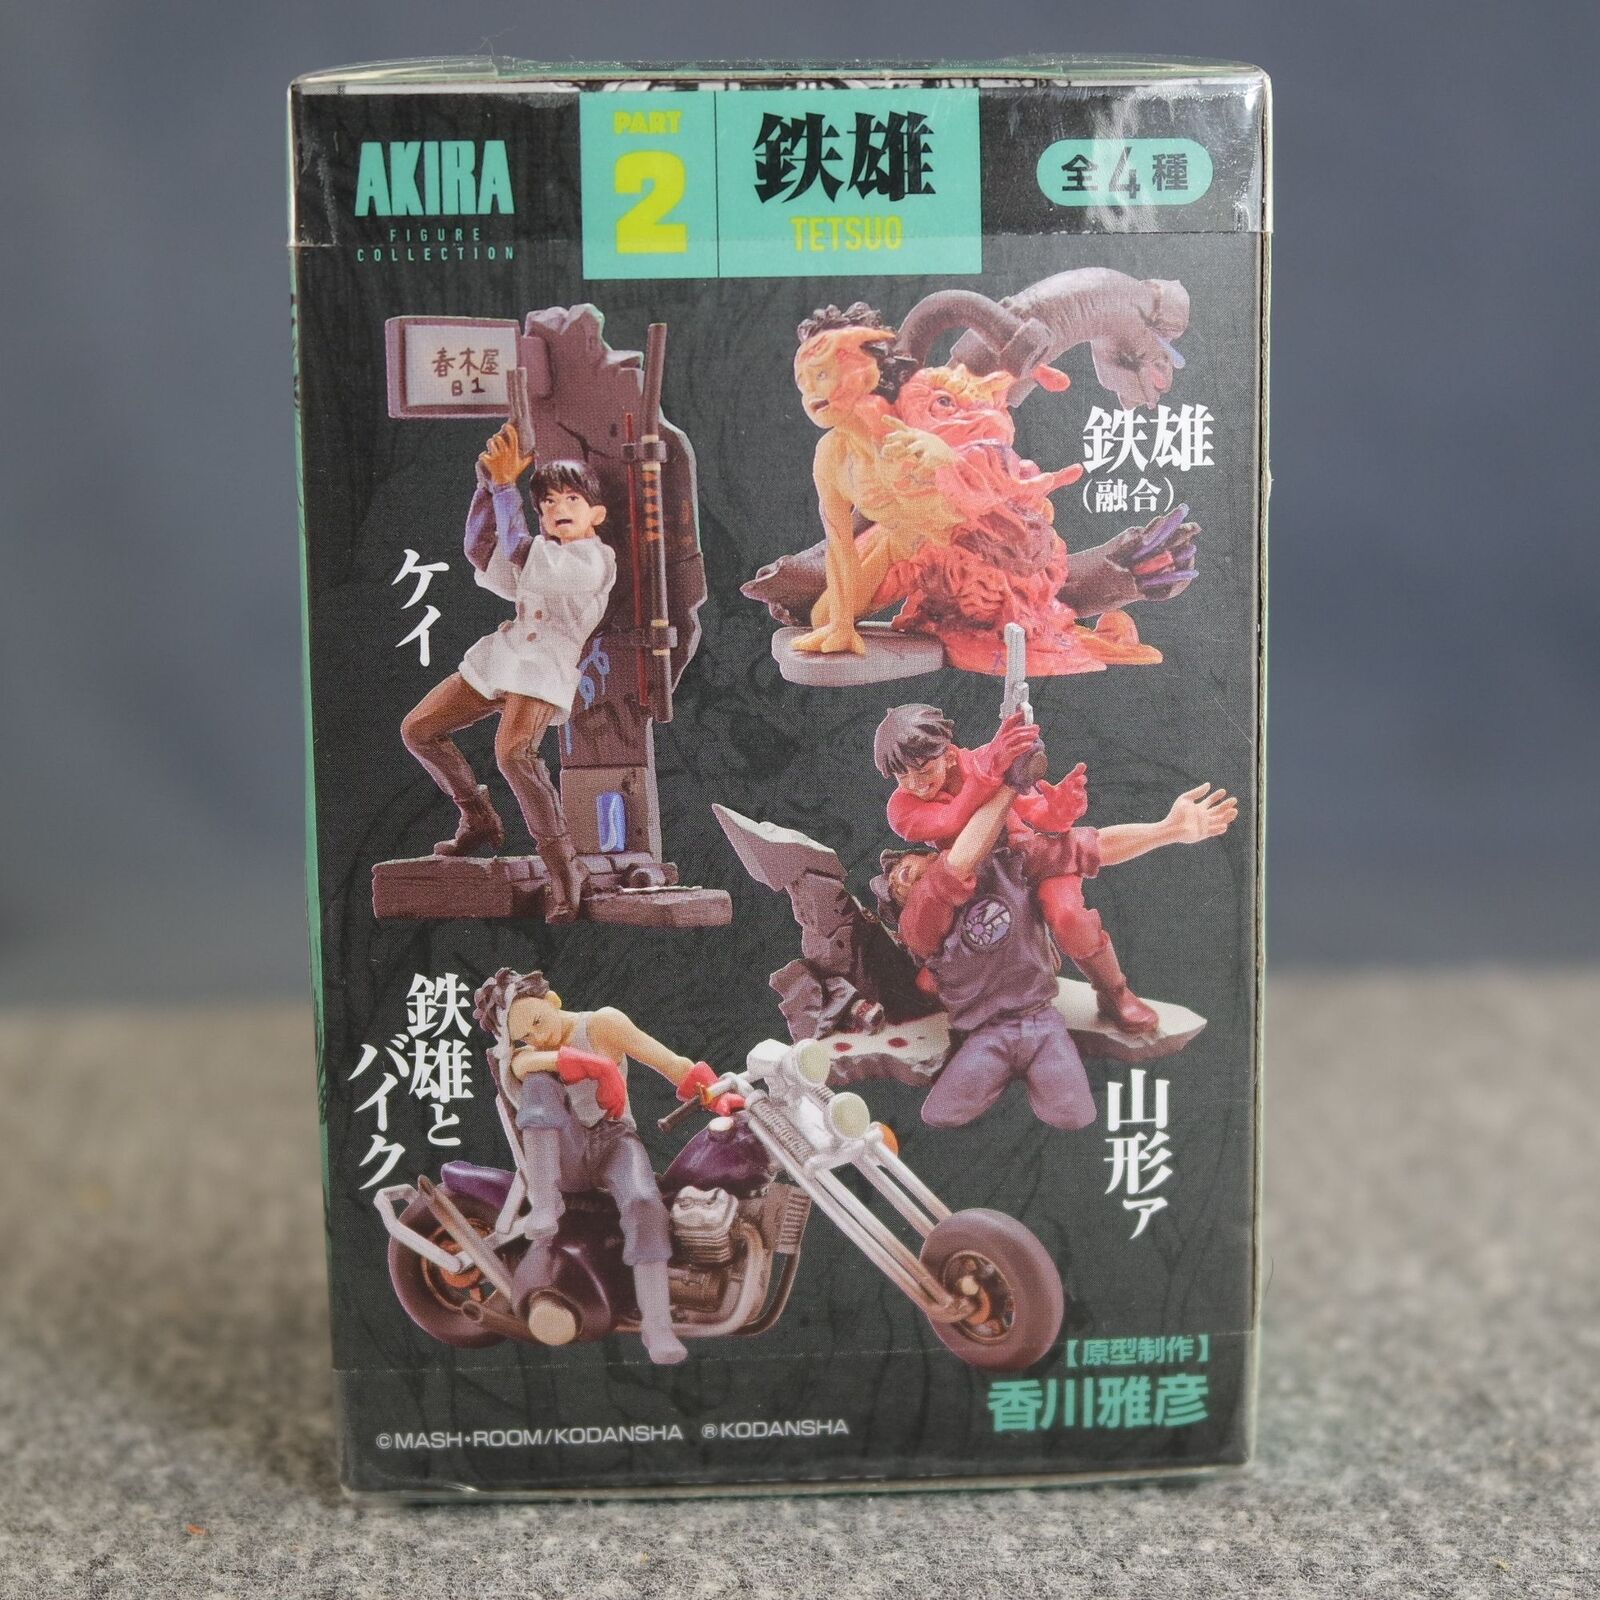 New AKIRA KAIYODO Figure MiniQ Part 2 Tetsuo Figures Sealed Box